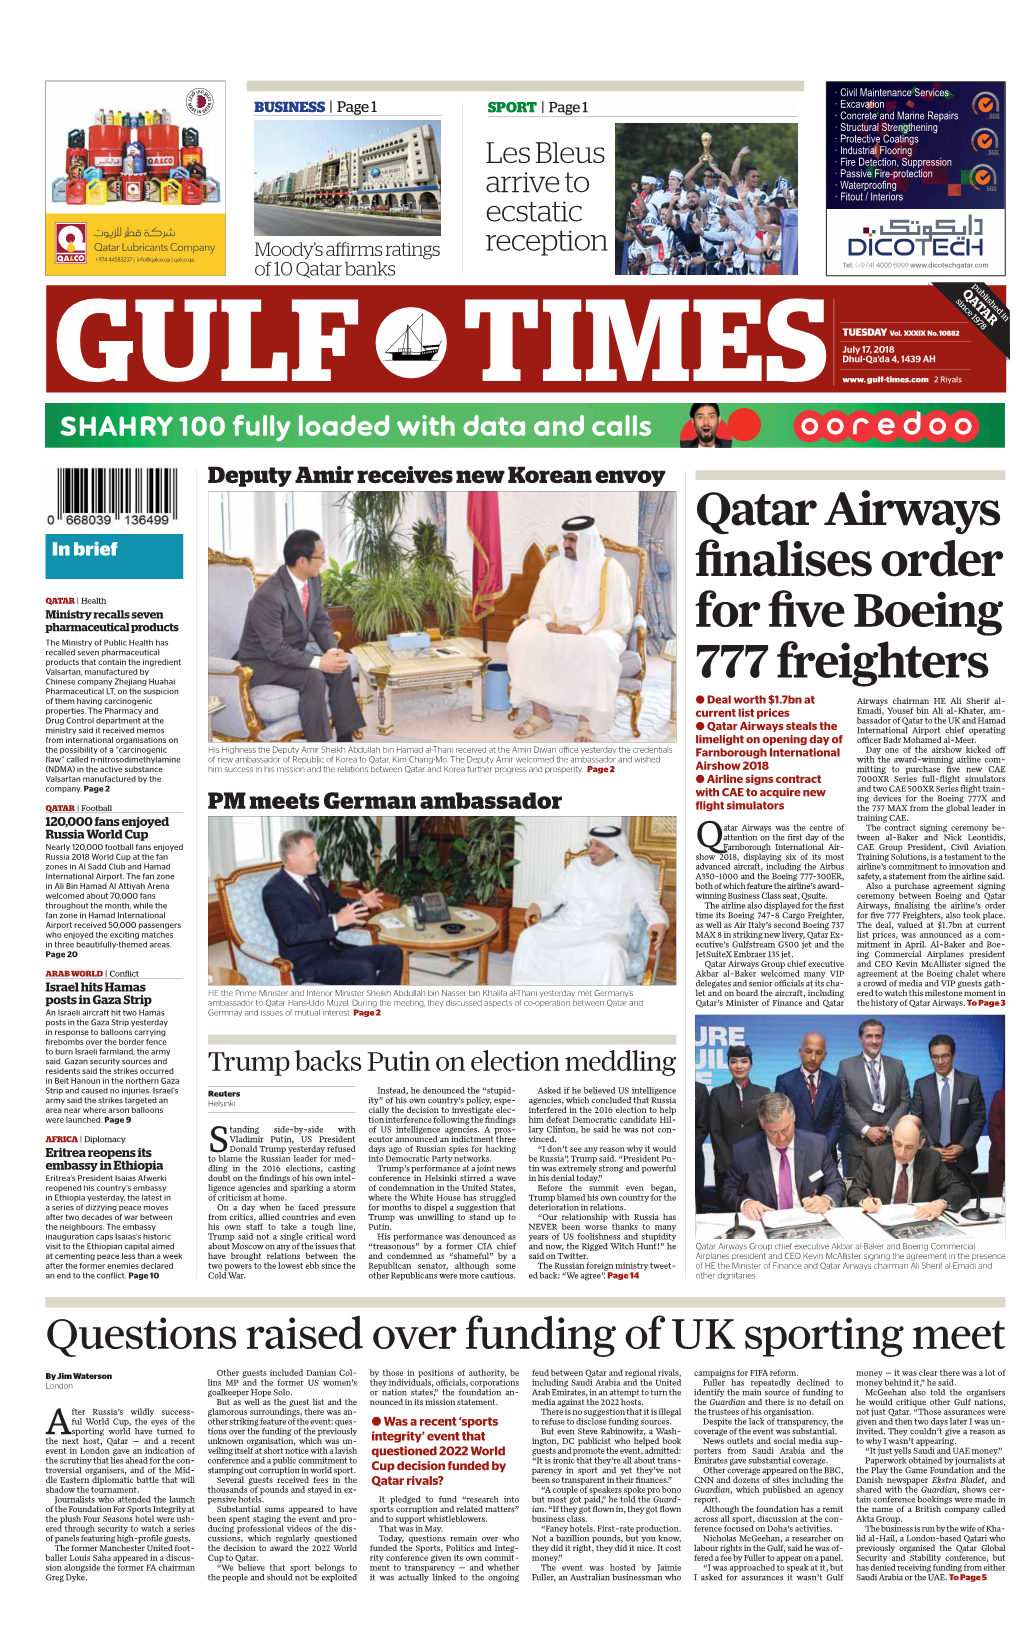 Qatar Airways Finalises Order for Five Boeing 777 Freighters